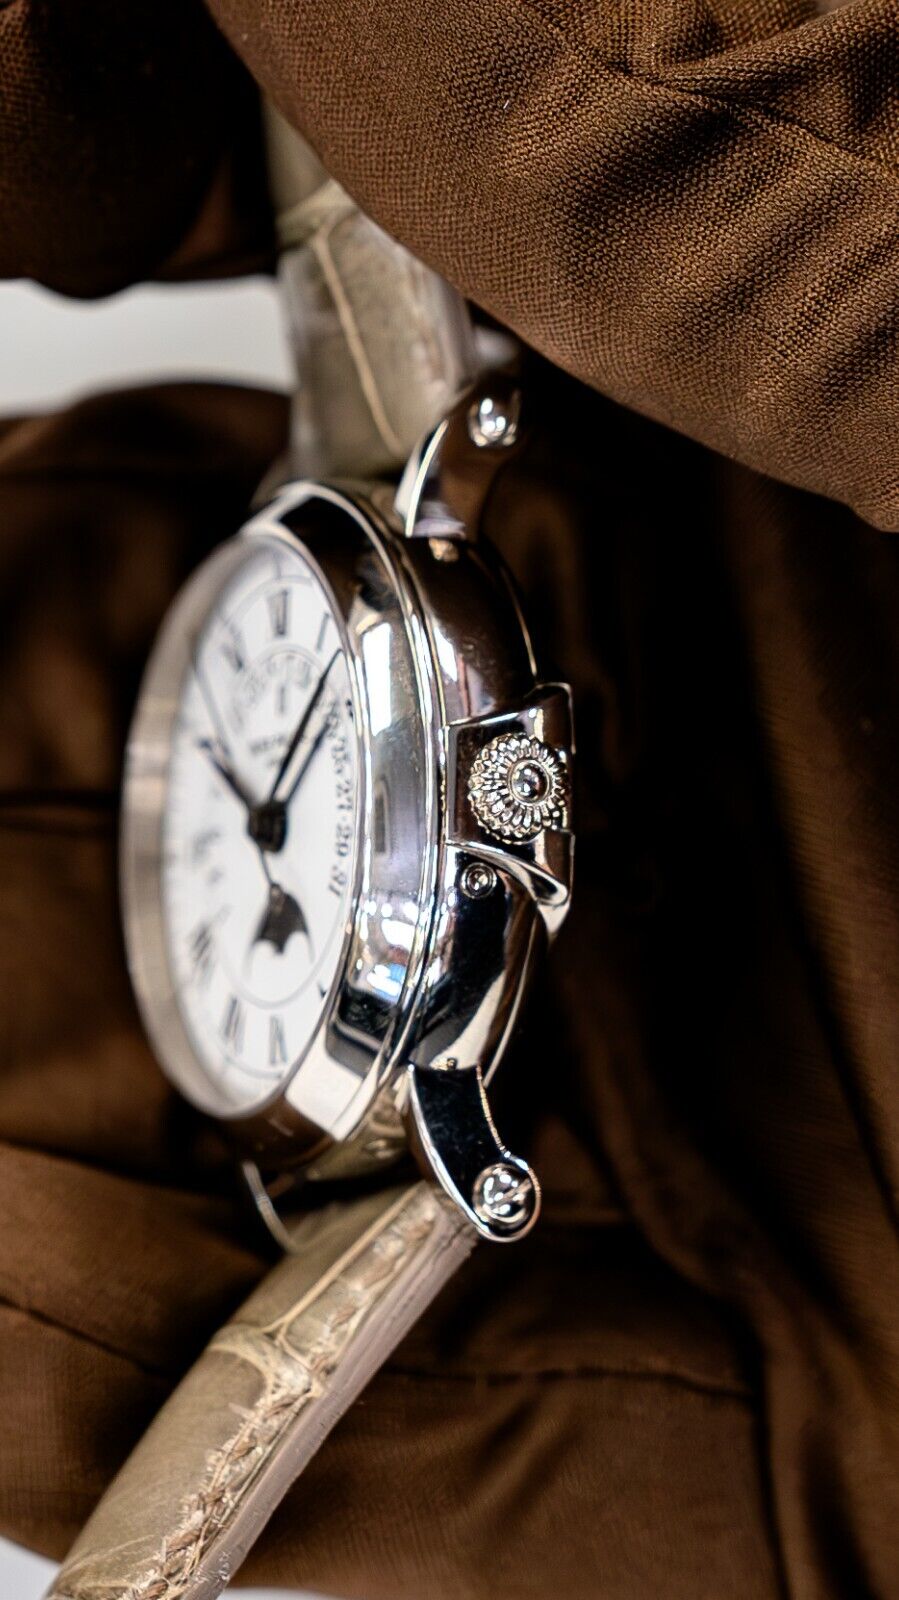 Patek Philippe Calatrava Perpetual Calendar White Gold Men's Watch 5059G